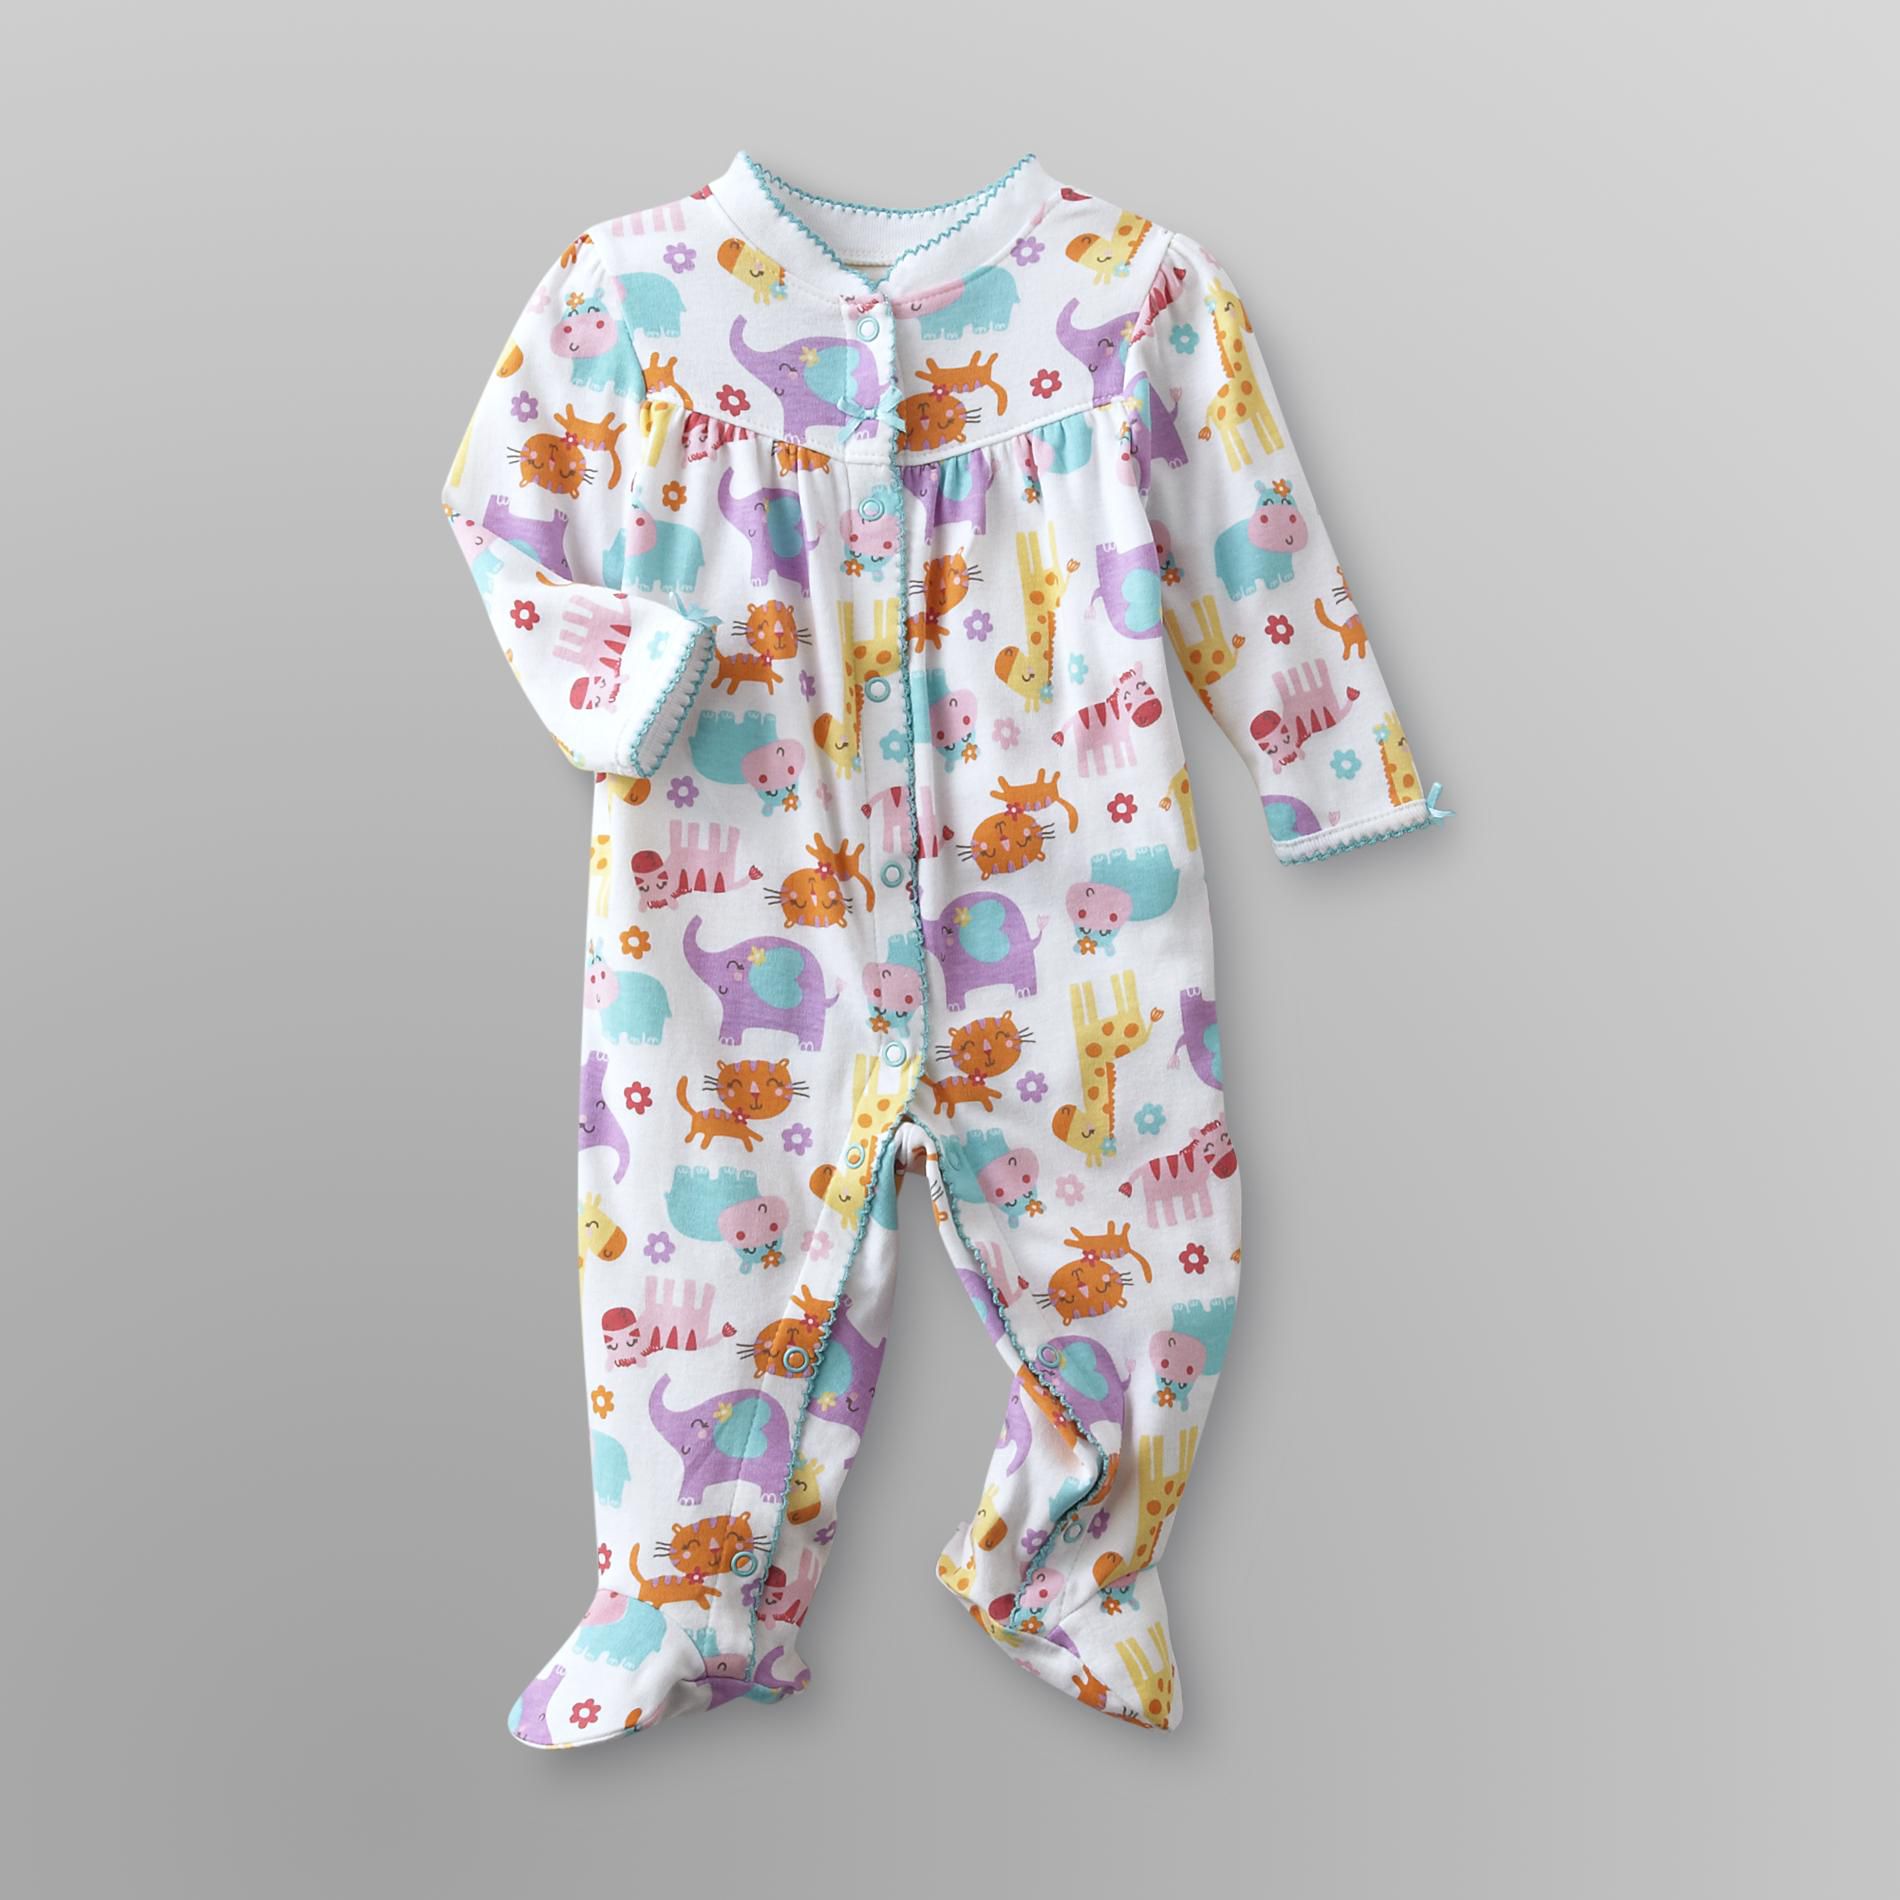 Little Wonders Newborn Girl's Sleeper Pajamas - Animals